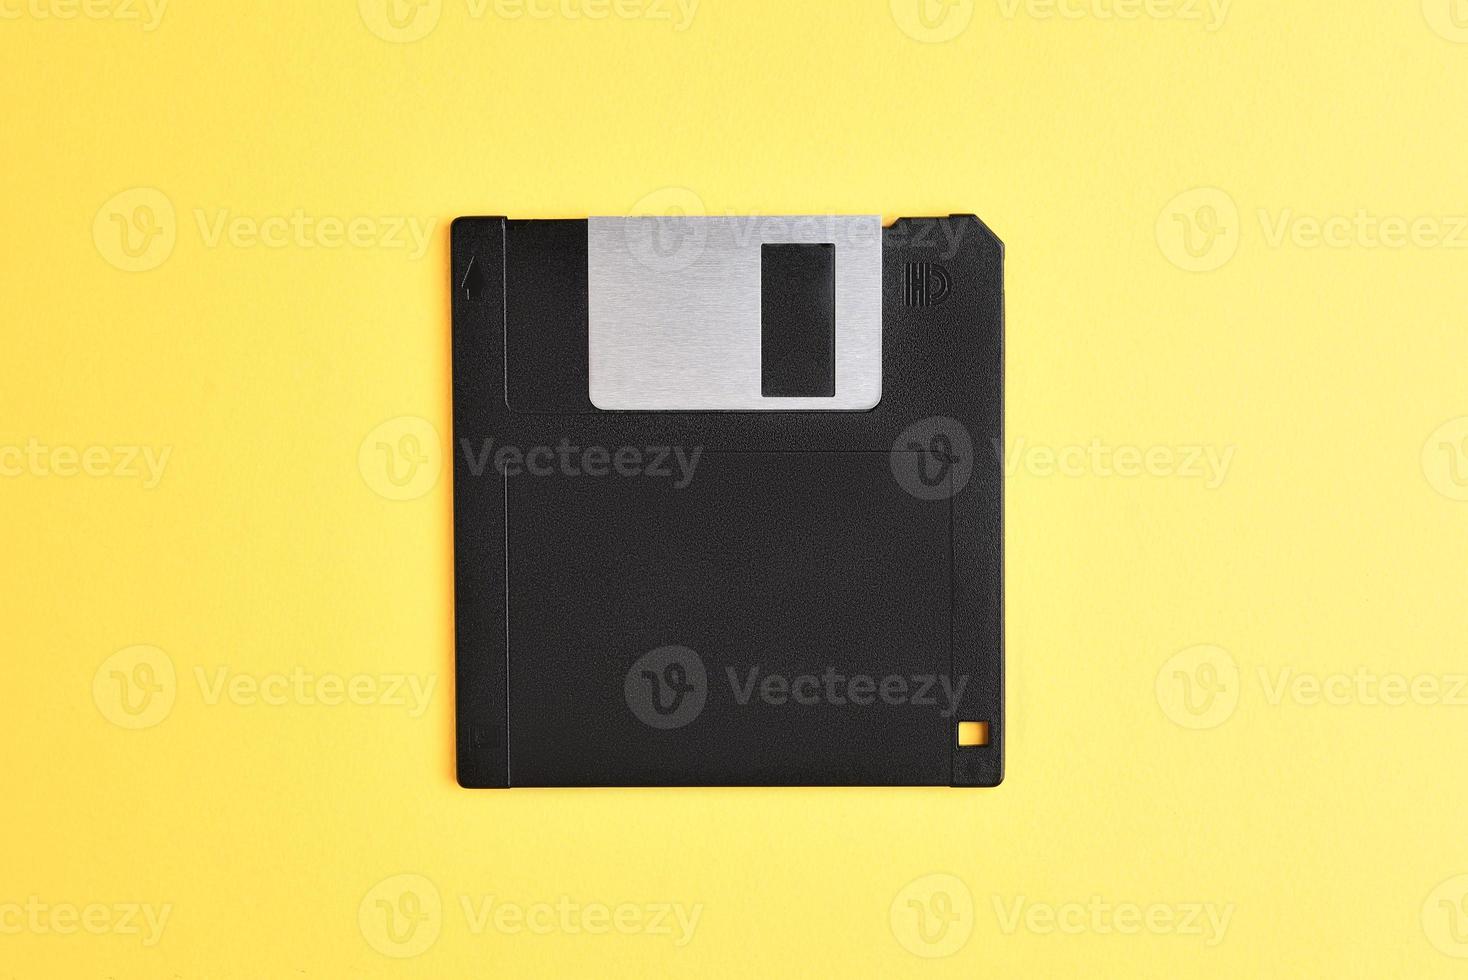 Floppy disk on yellow background photo